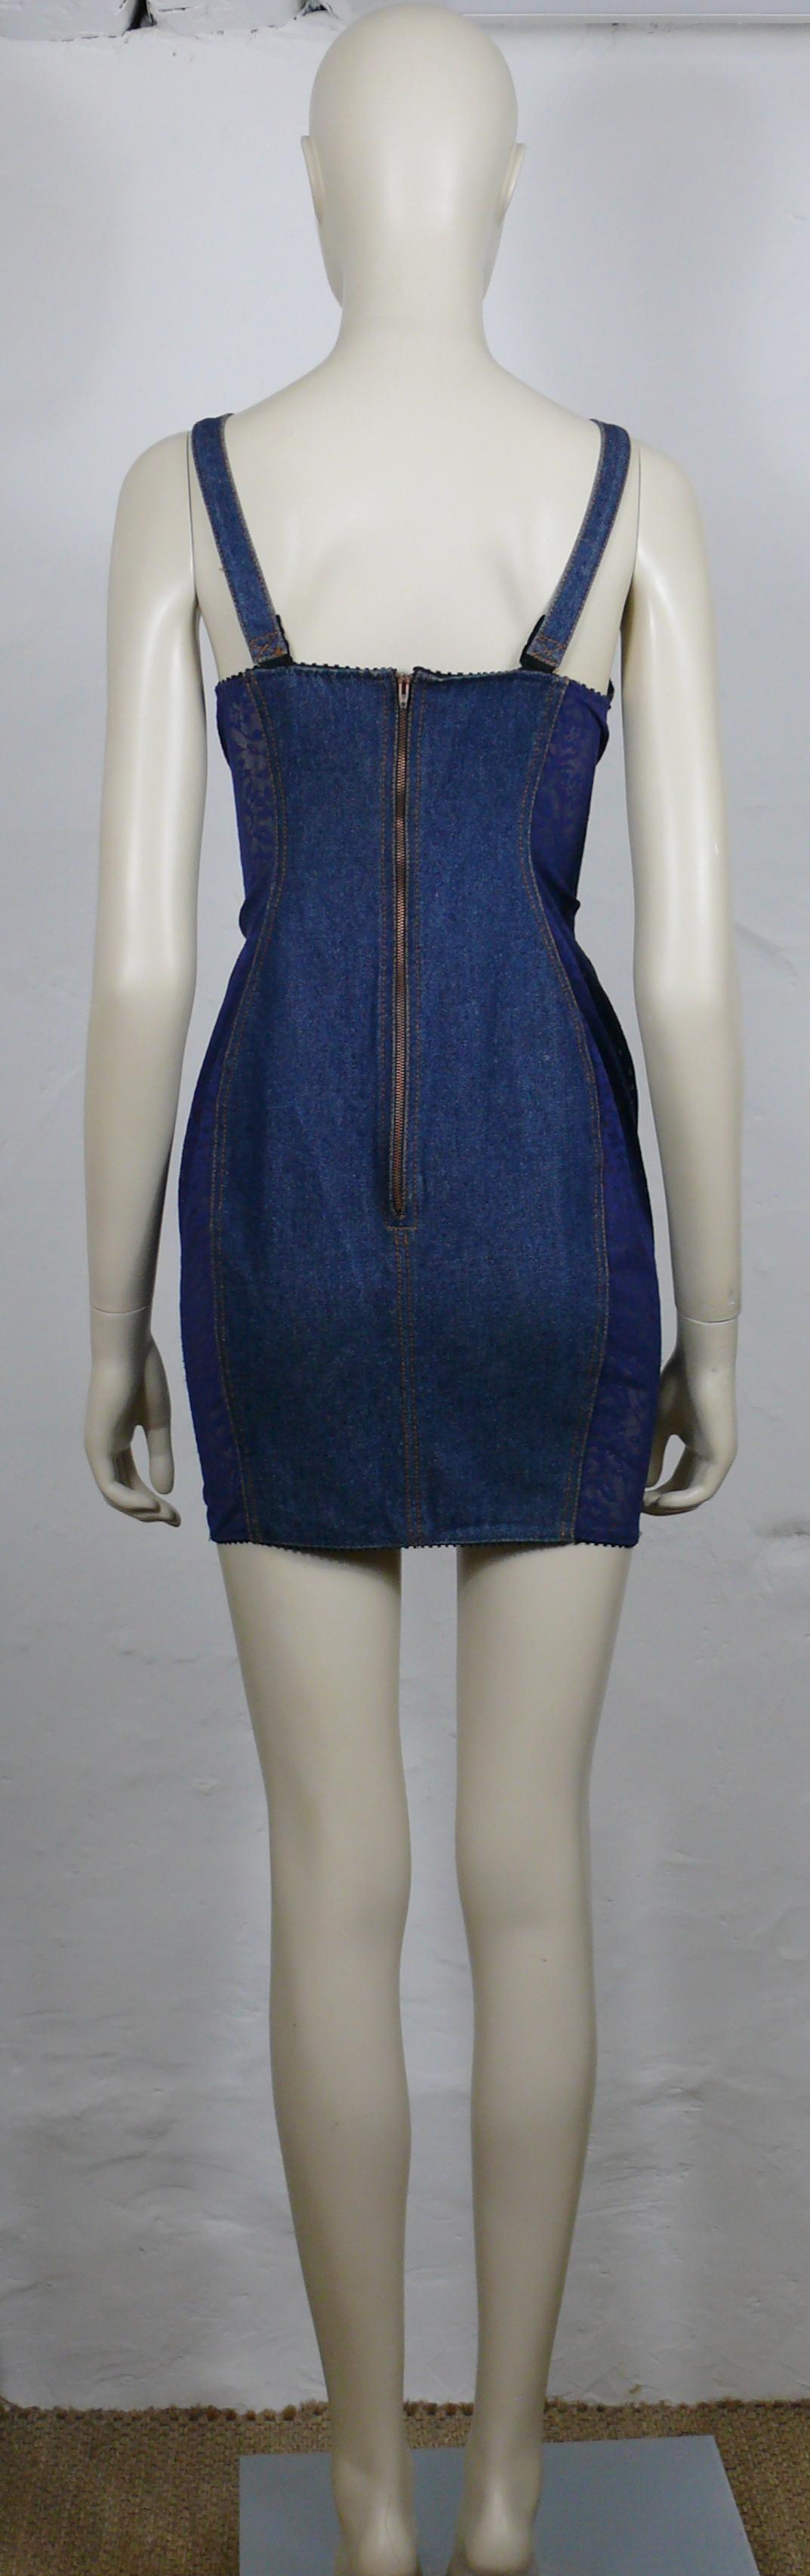 JEAN PAUL GAULTIER JUNIOR Vintage Blue Lace Sheer Panel Bra Mini Denim Dress For Sale 4